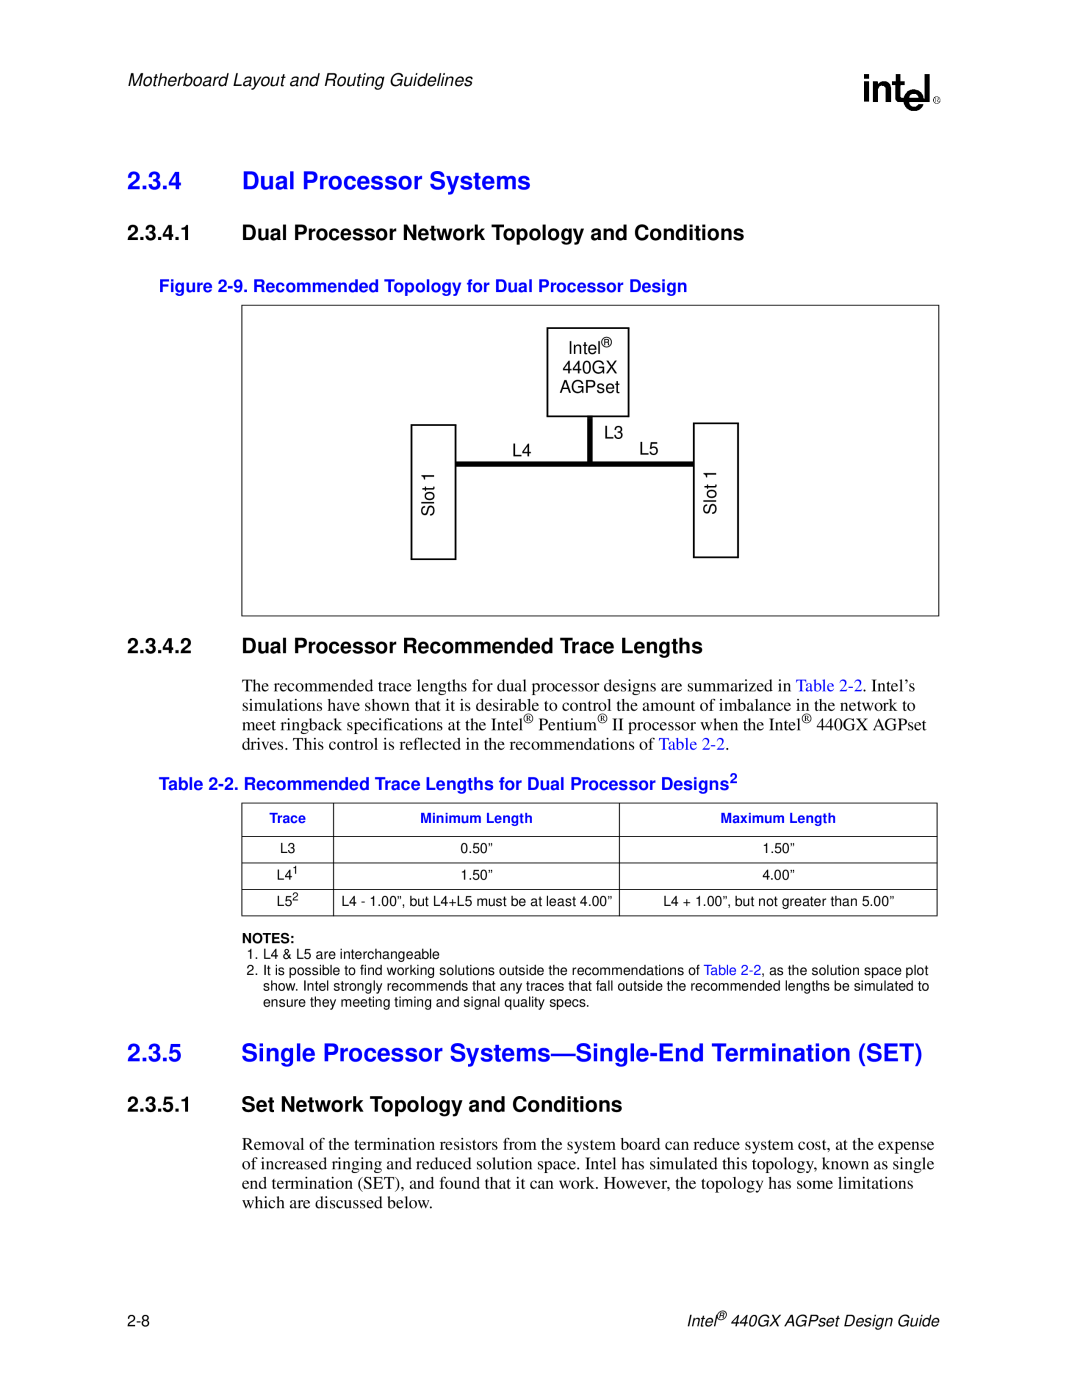 Intel 440GX manual Dual Processor Systems, Single Processor Systems-Single-End Termination SET 